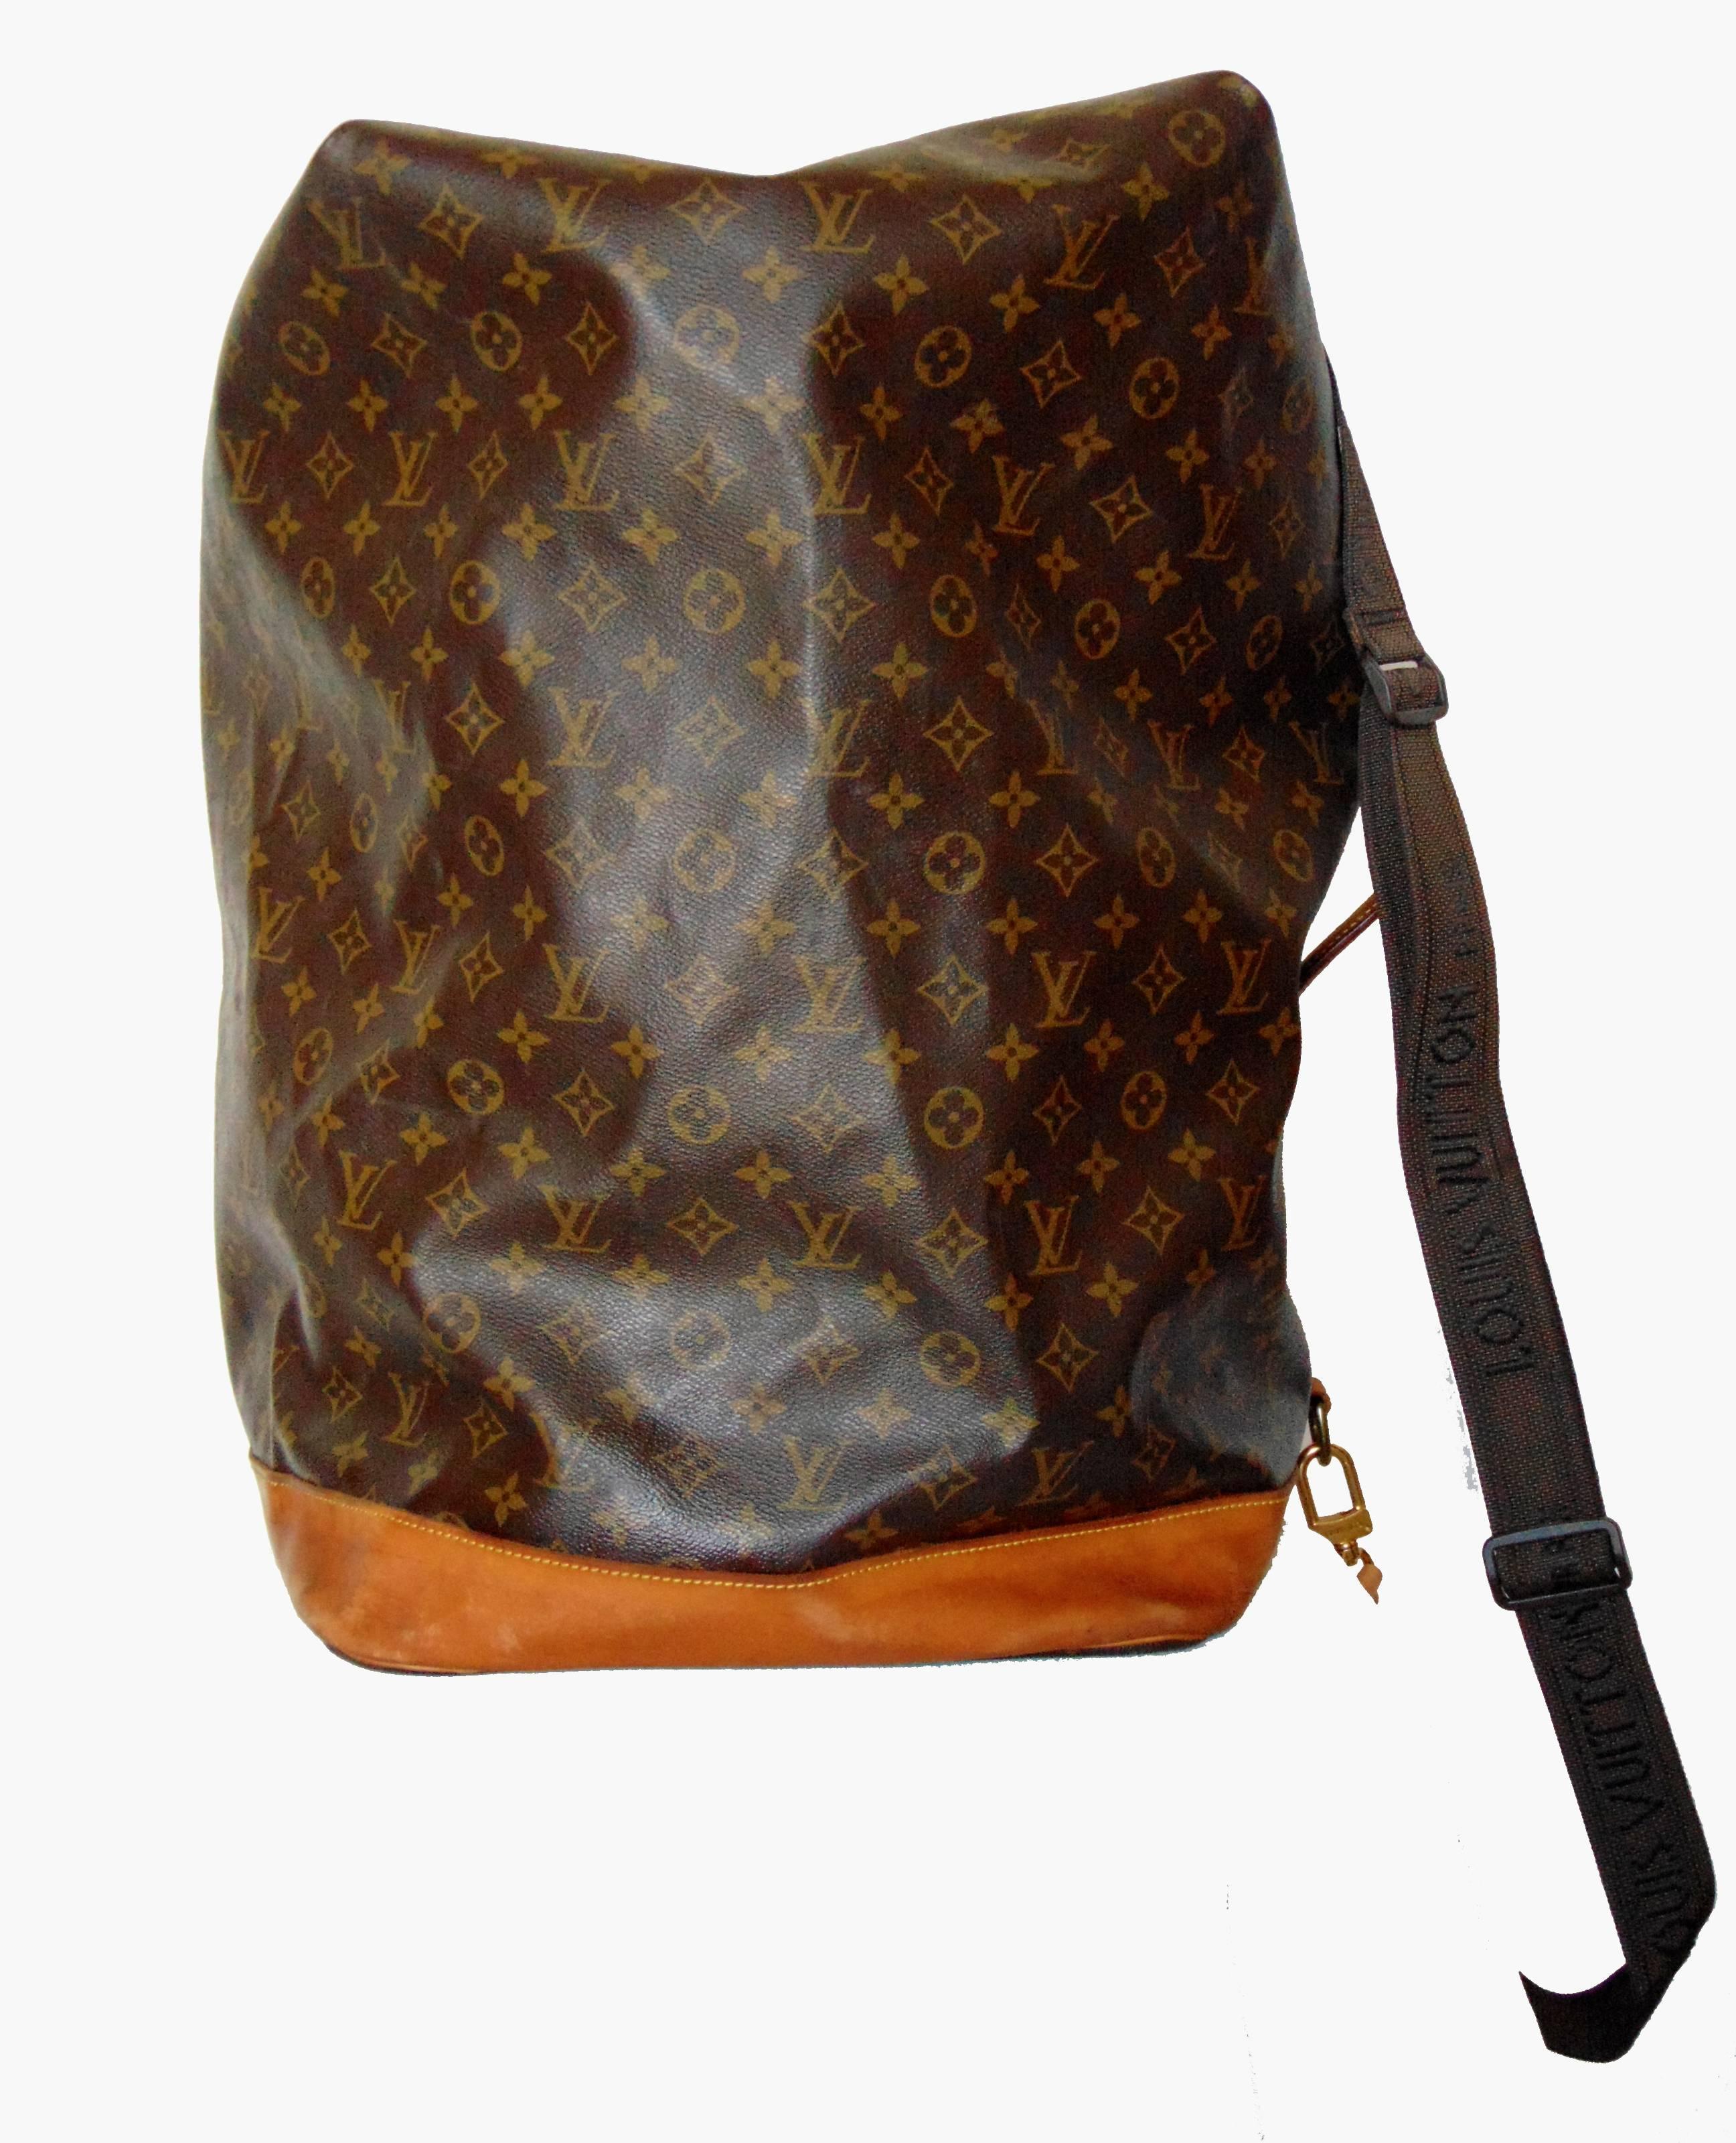 Black Louis Vuitton Sac Marin Bag Monogram Extra Large Duffle with Shoulder Strap 1990